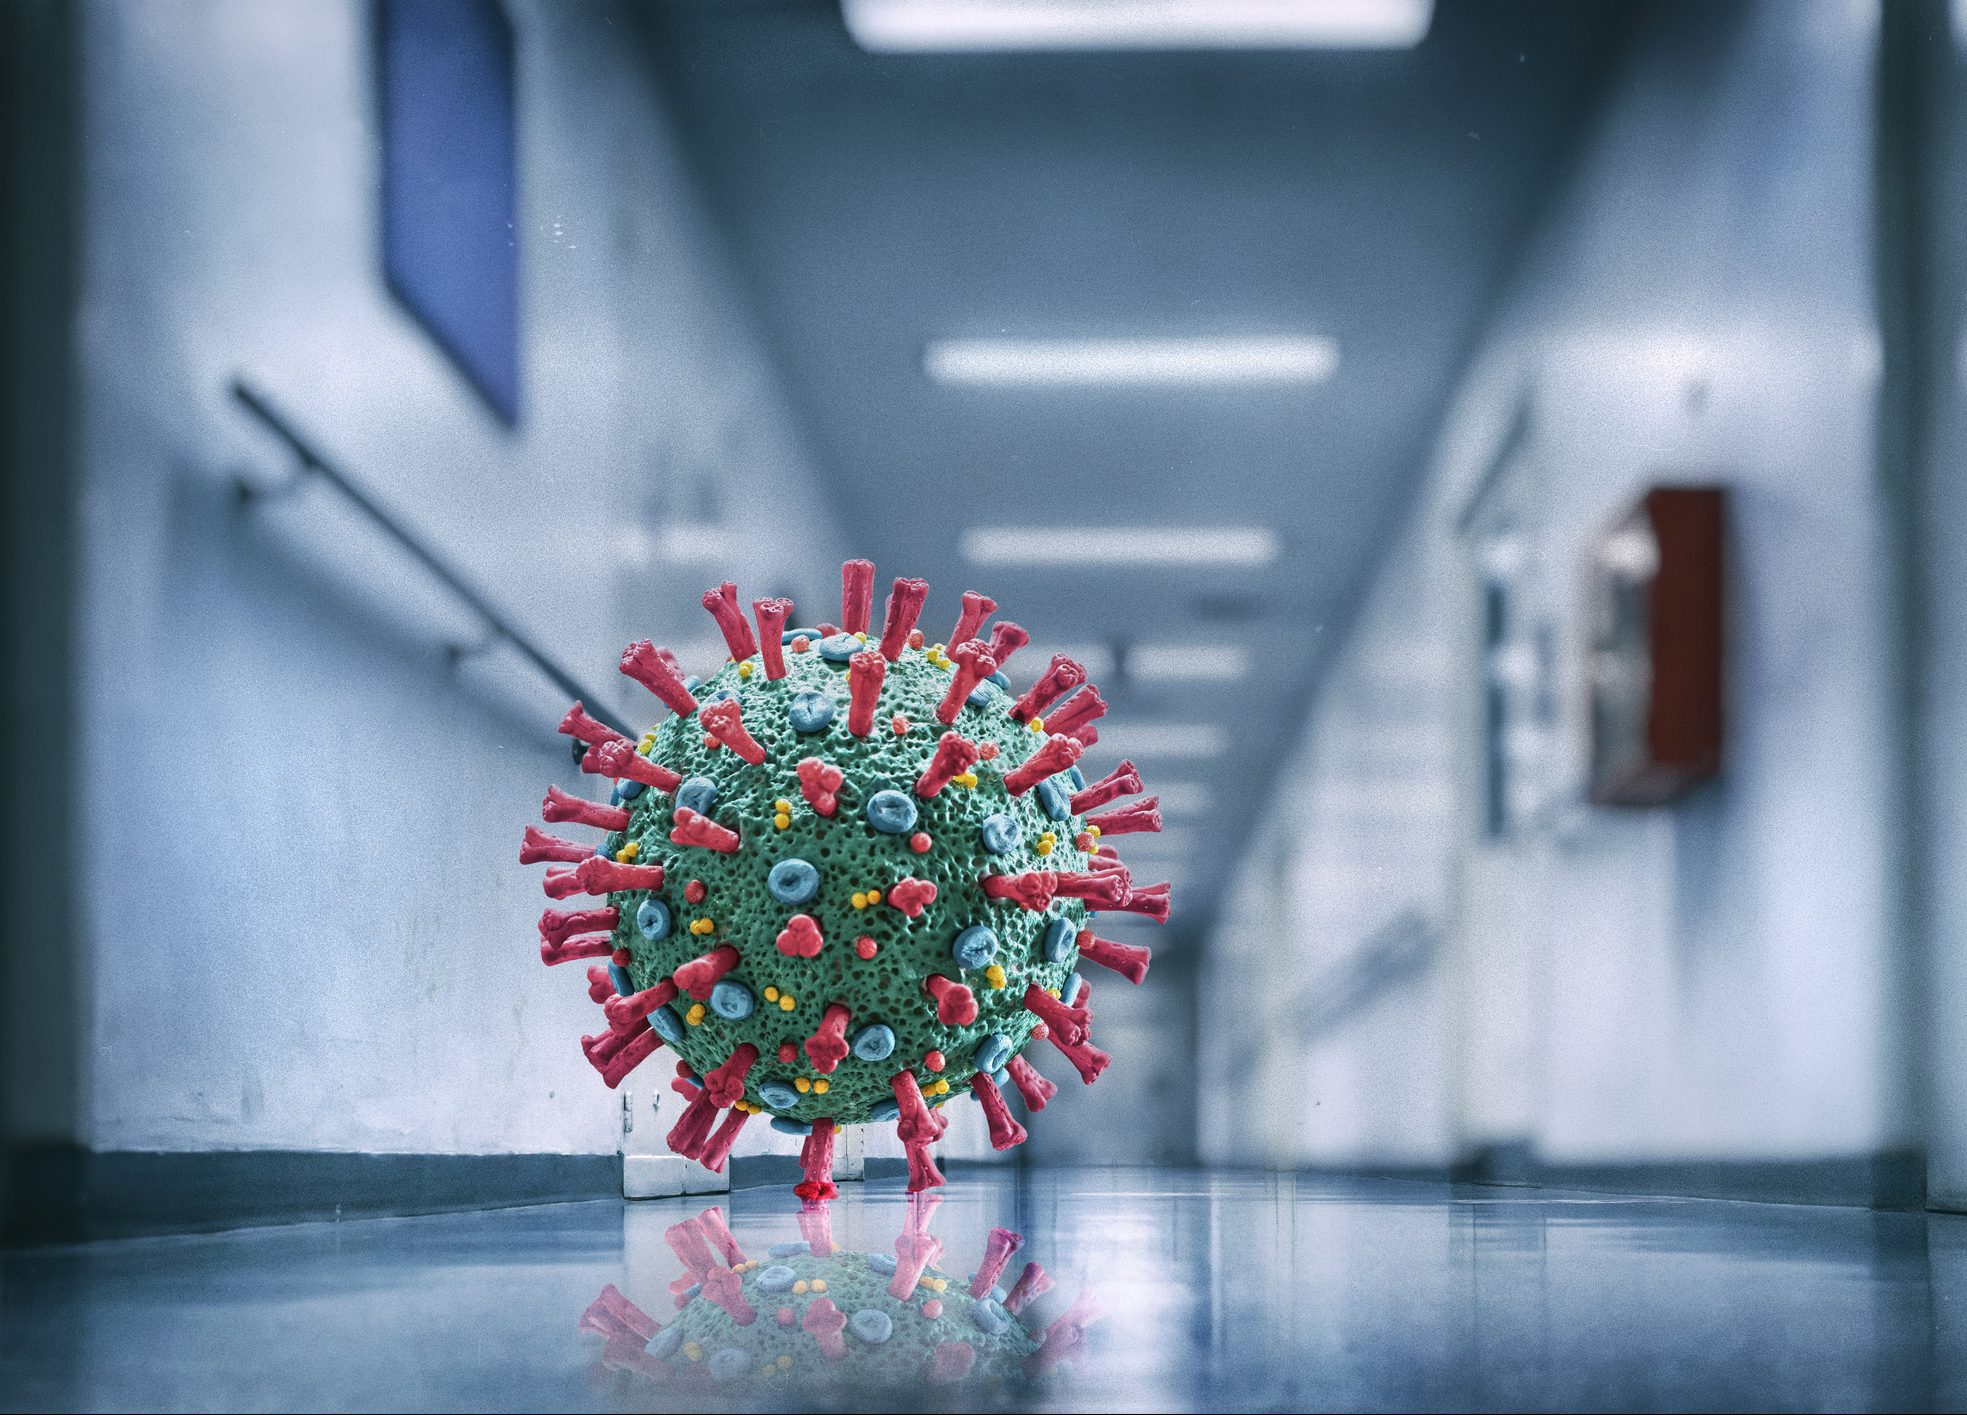 FUNIBER-corona-virus-covid-diecinueve-floating-microscopic-macro-mockup-in-empty-hospital